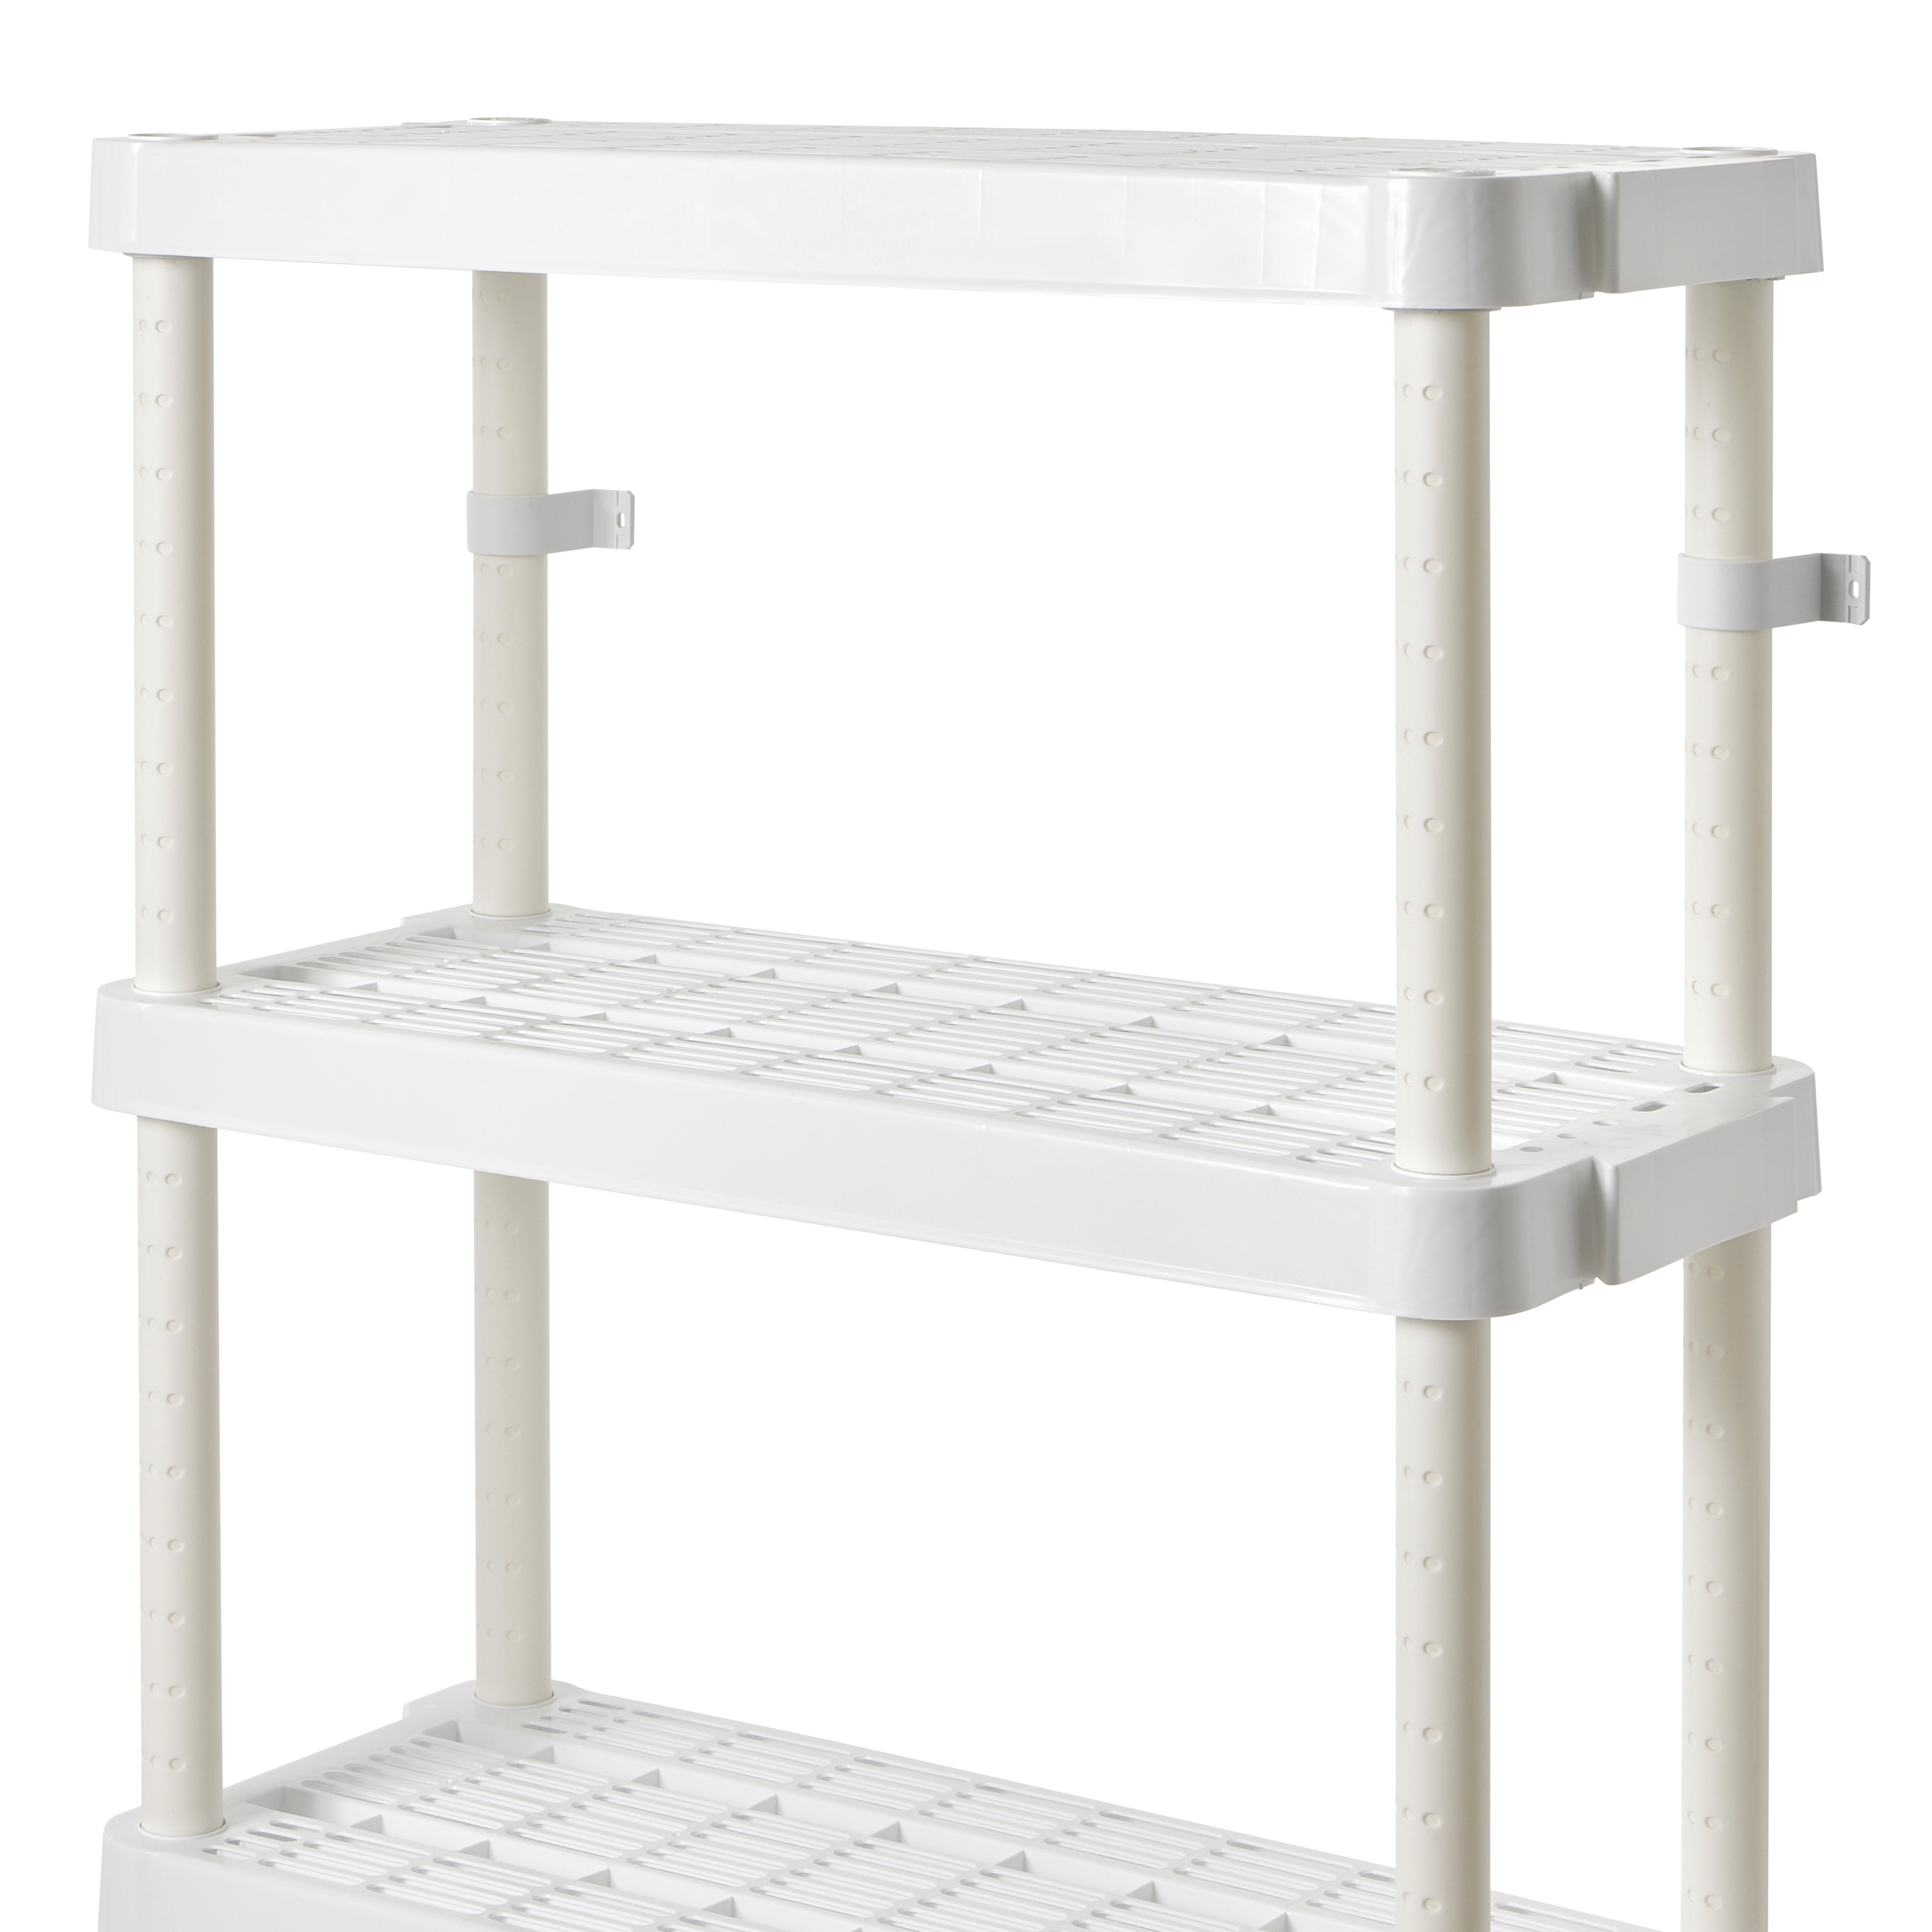 Gracious Living 4 Shelf Adjustable Ventilated Medium Duty Shelving Unit 14  x 32 x 54.5, White 